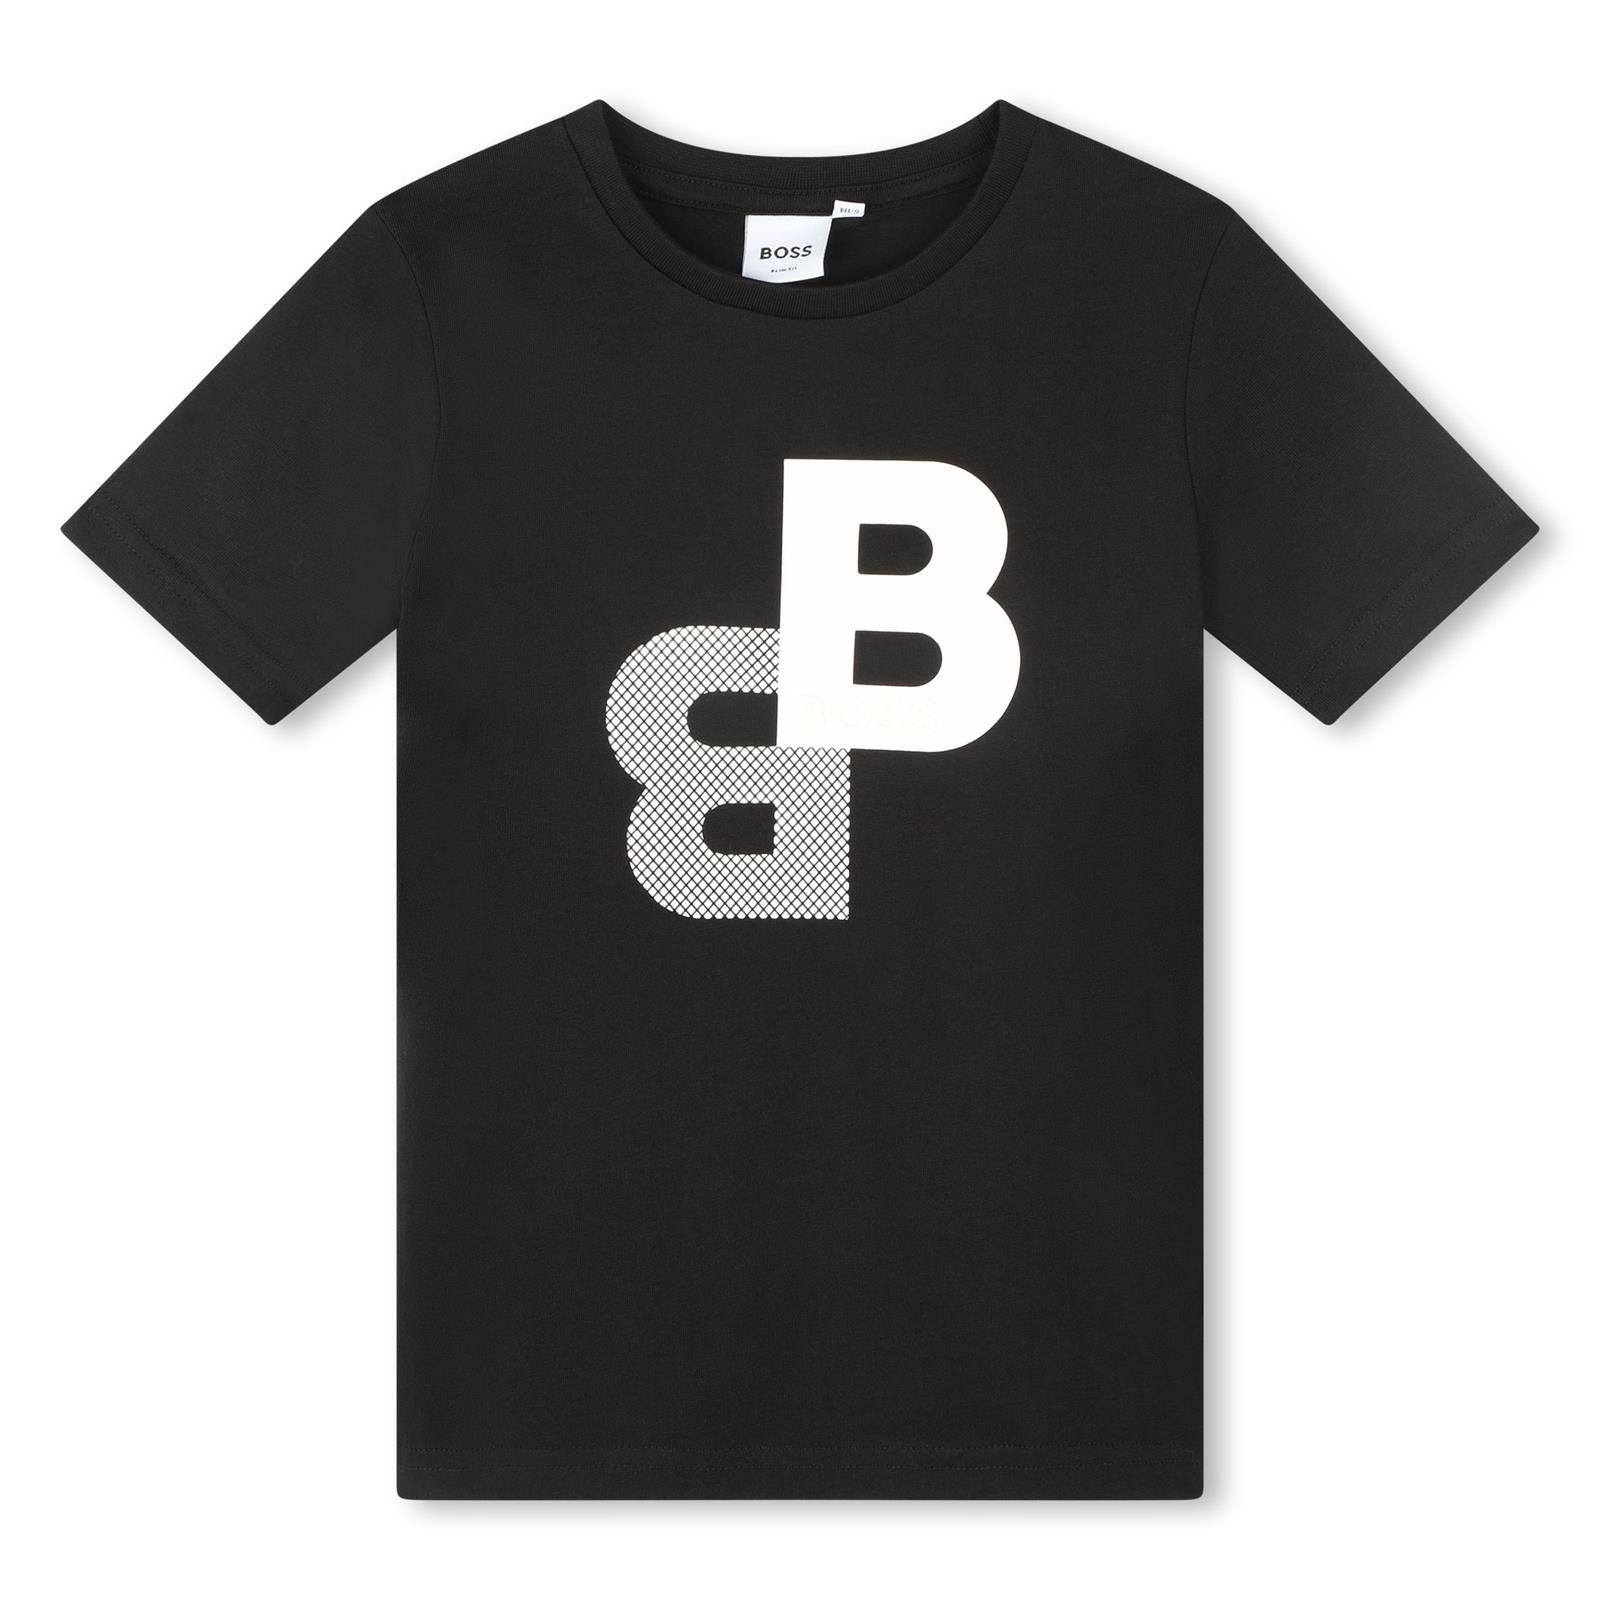 Hugo Boss BB Black T-Shirt